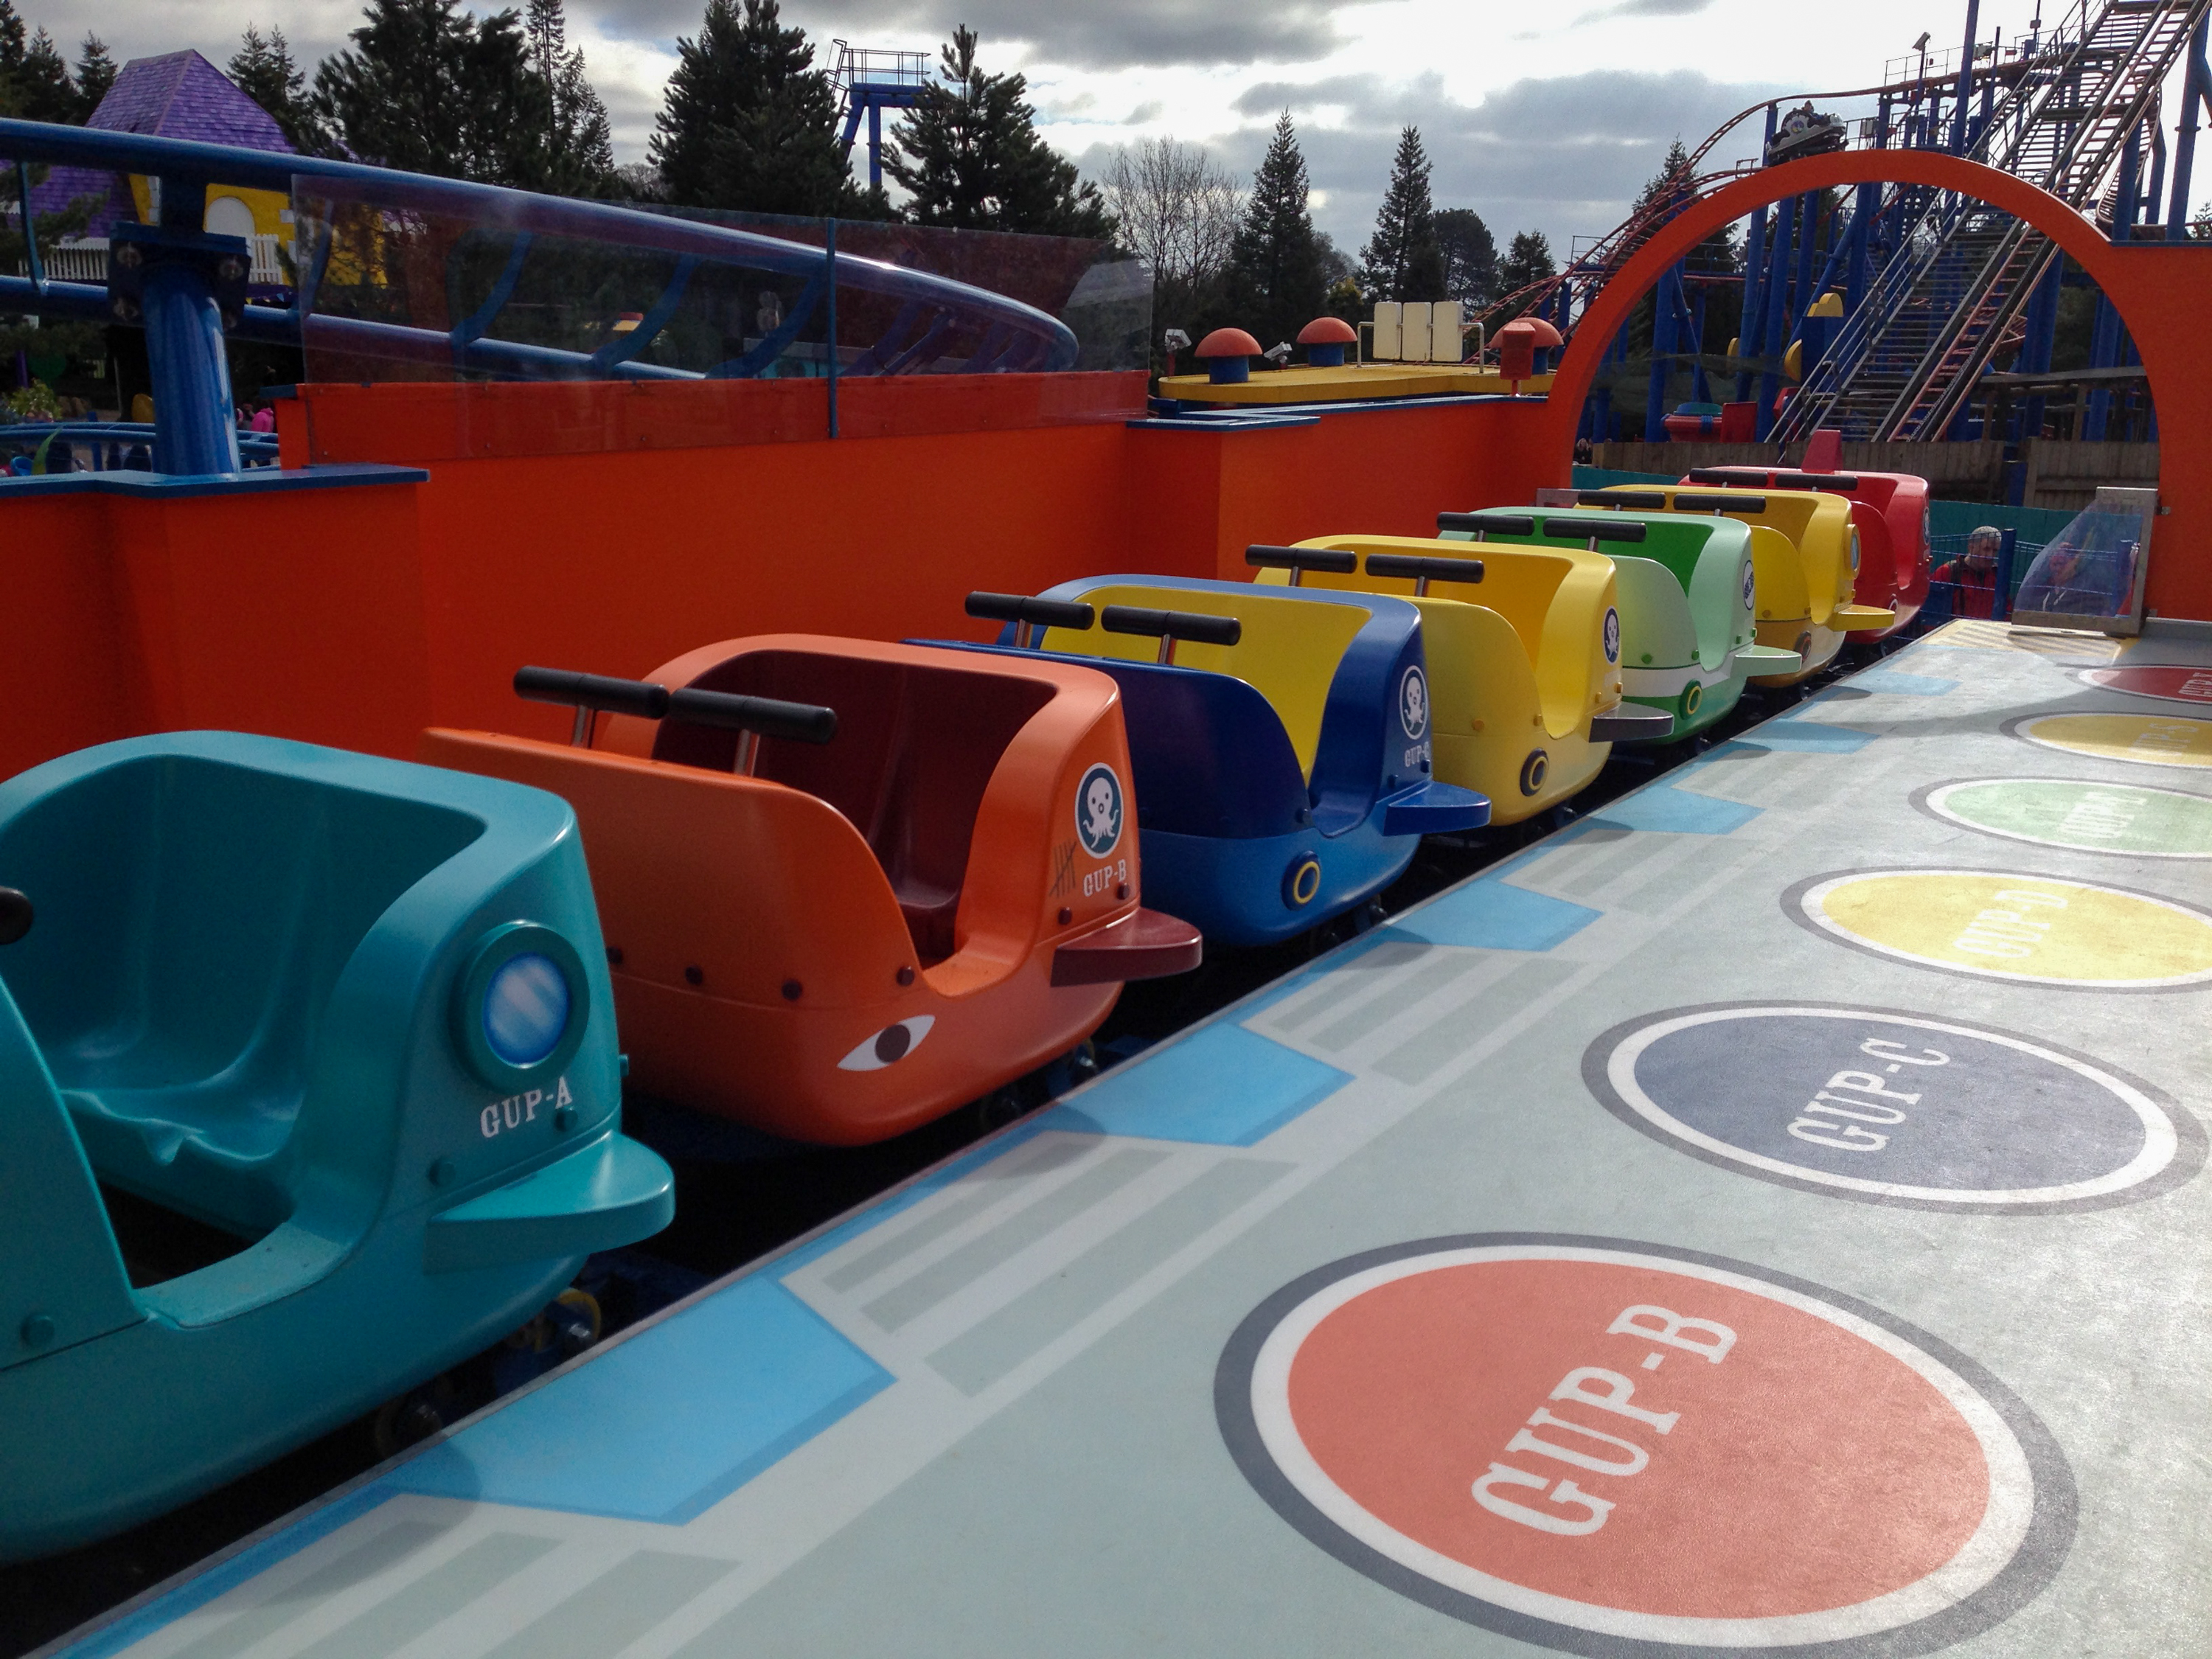 Octonauts Rollercoaster Adventure Opens